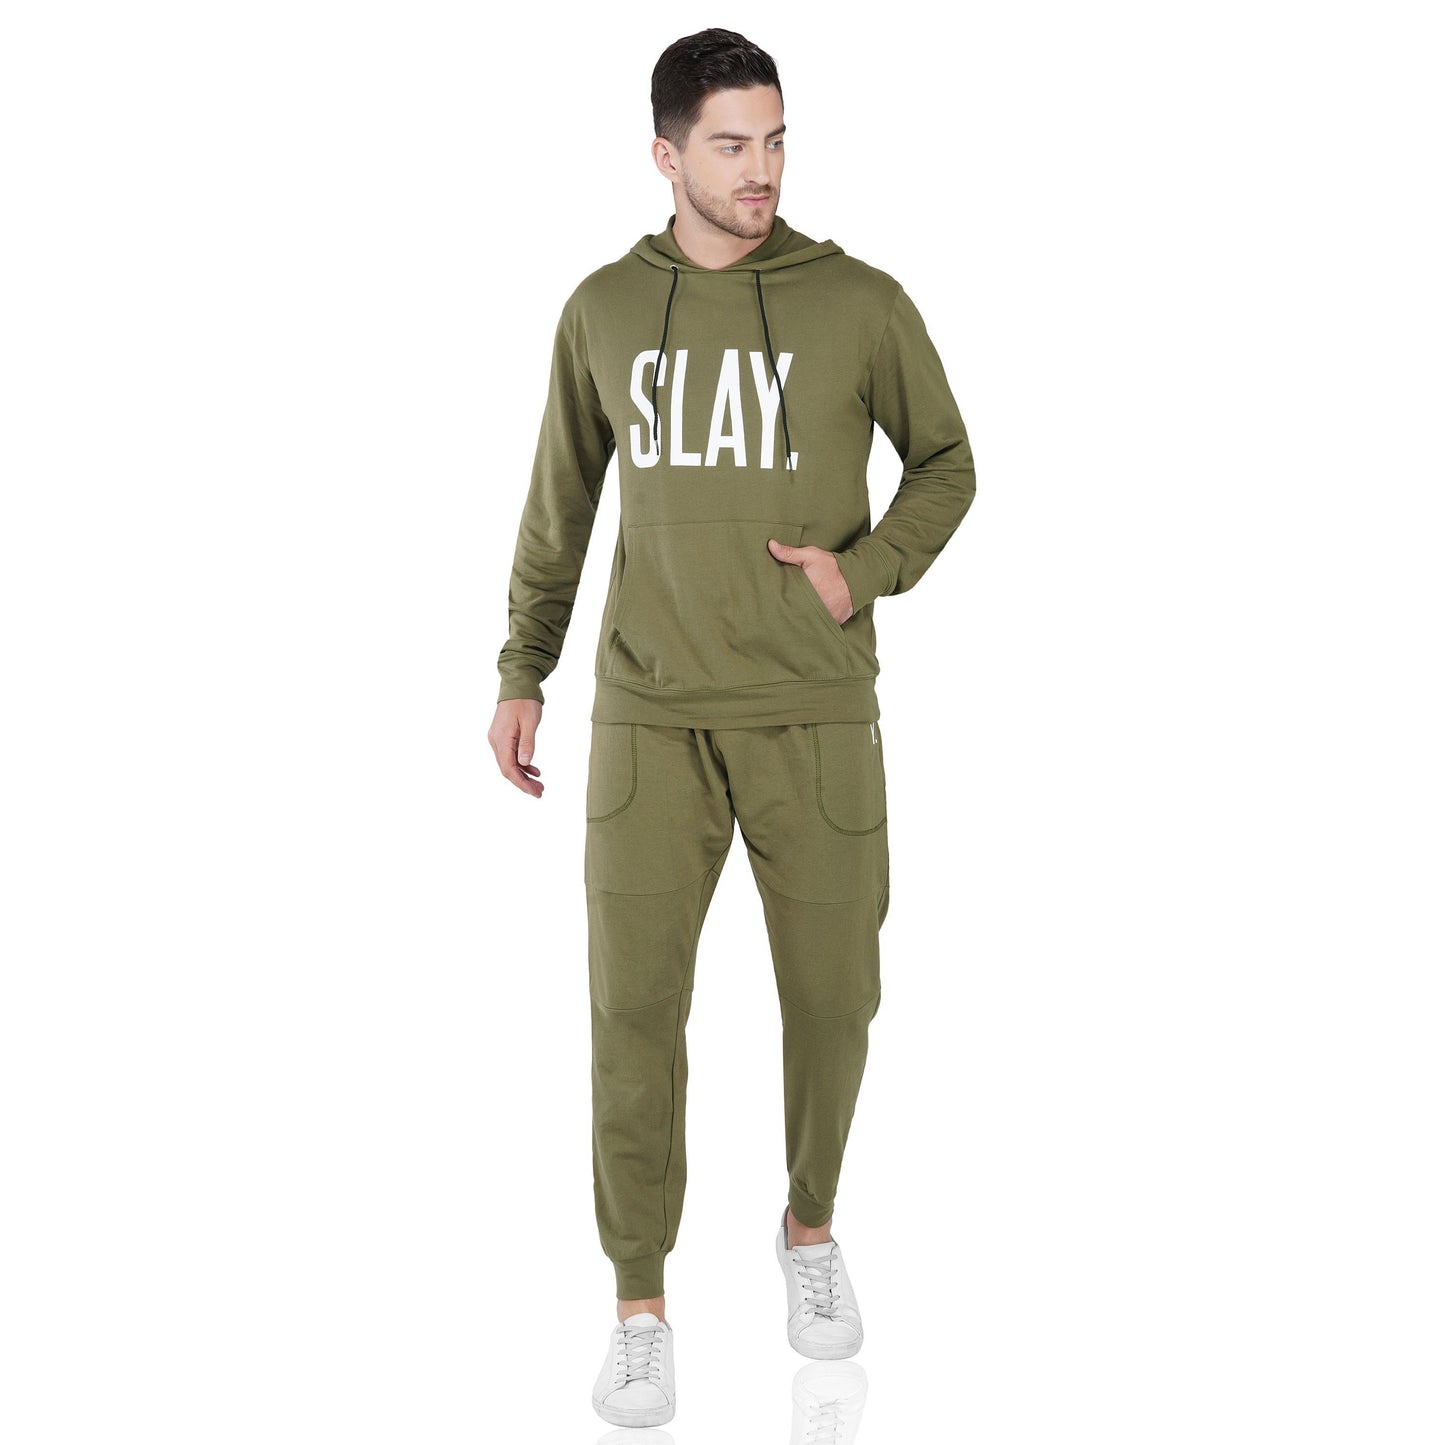 SLAY. Classic Men's Olive Green Tracksuit-clothing-to-slay.myshopify.com-Tracksuit